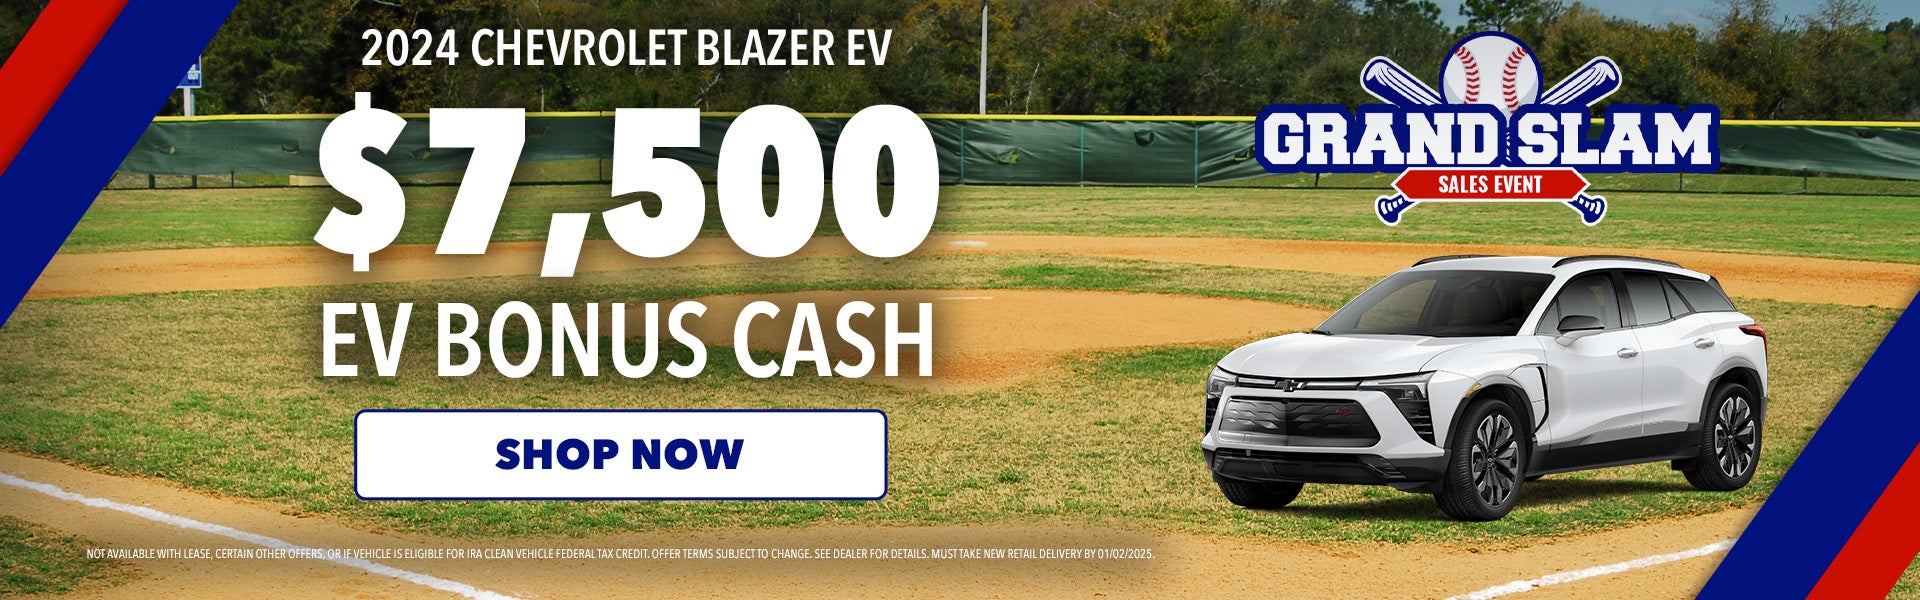 $7,500 bonus cash on 2024 Chevrolet Blazer EV